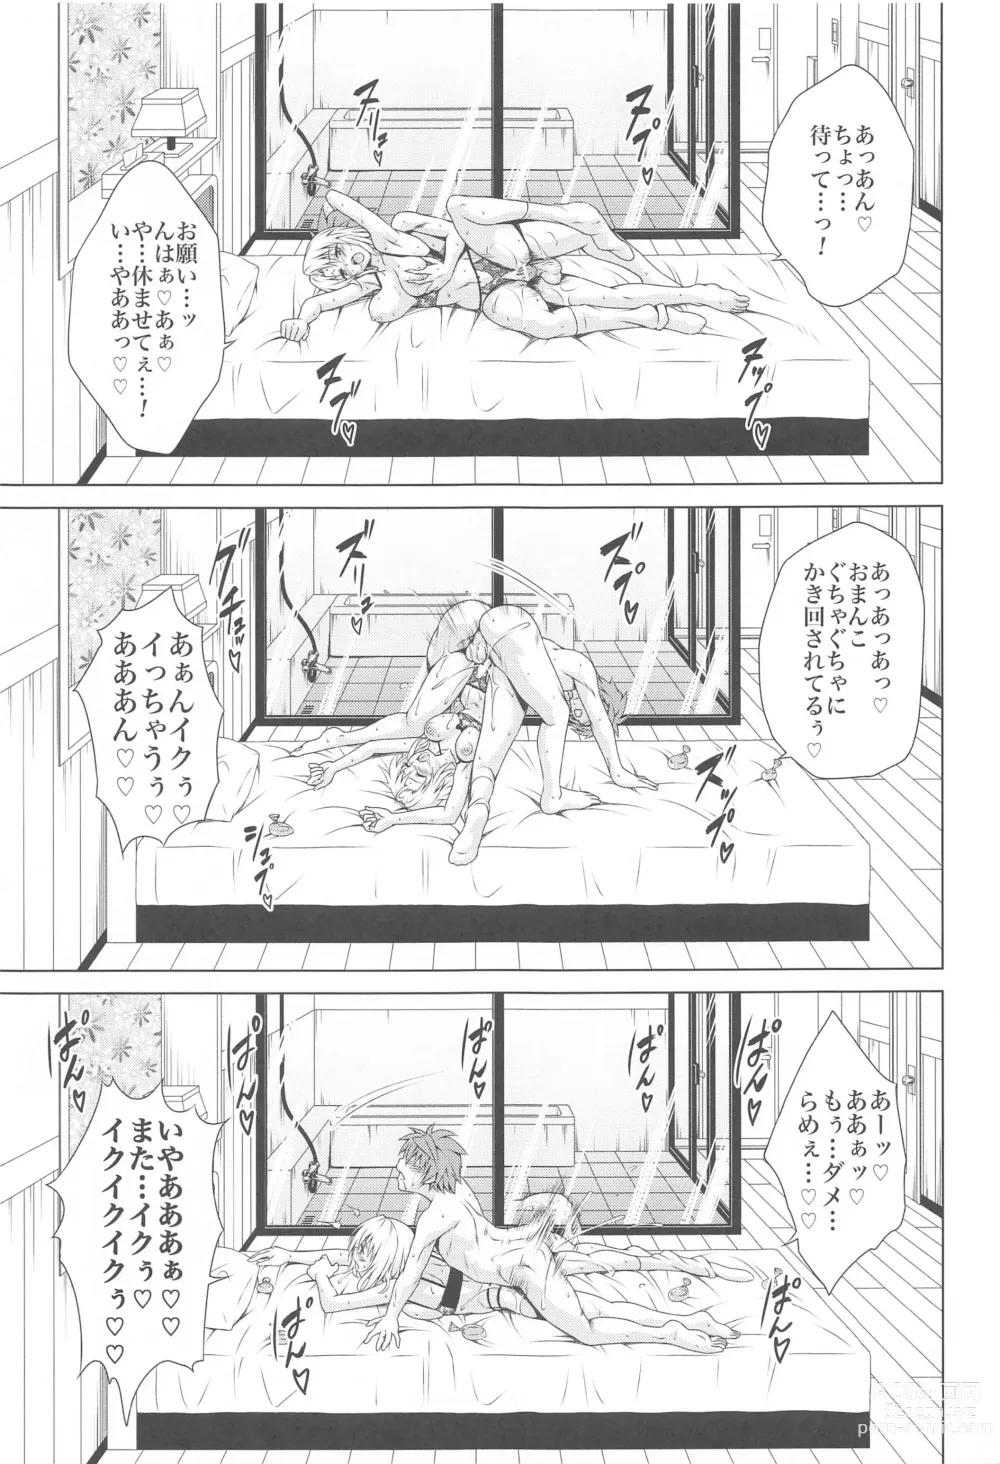 Page 20 of doujinshi Mezase! Rakuen Keikaku RX vol. 3